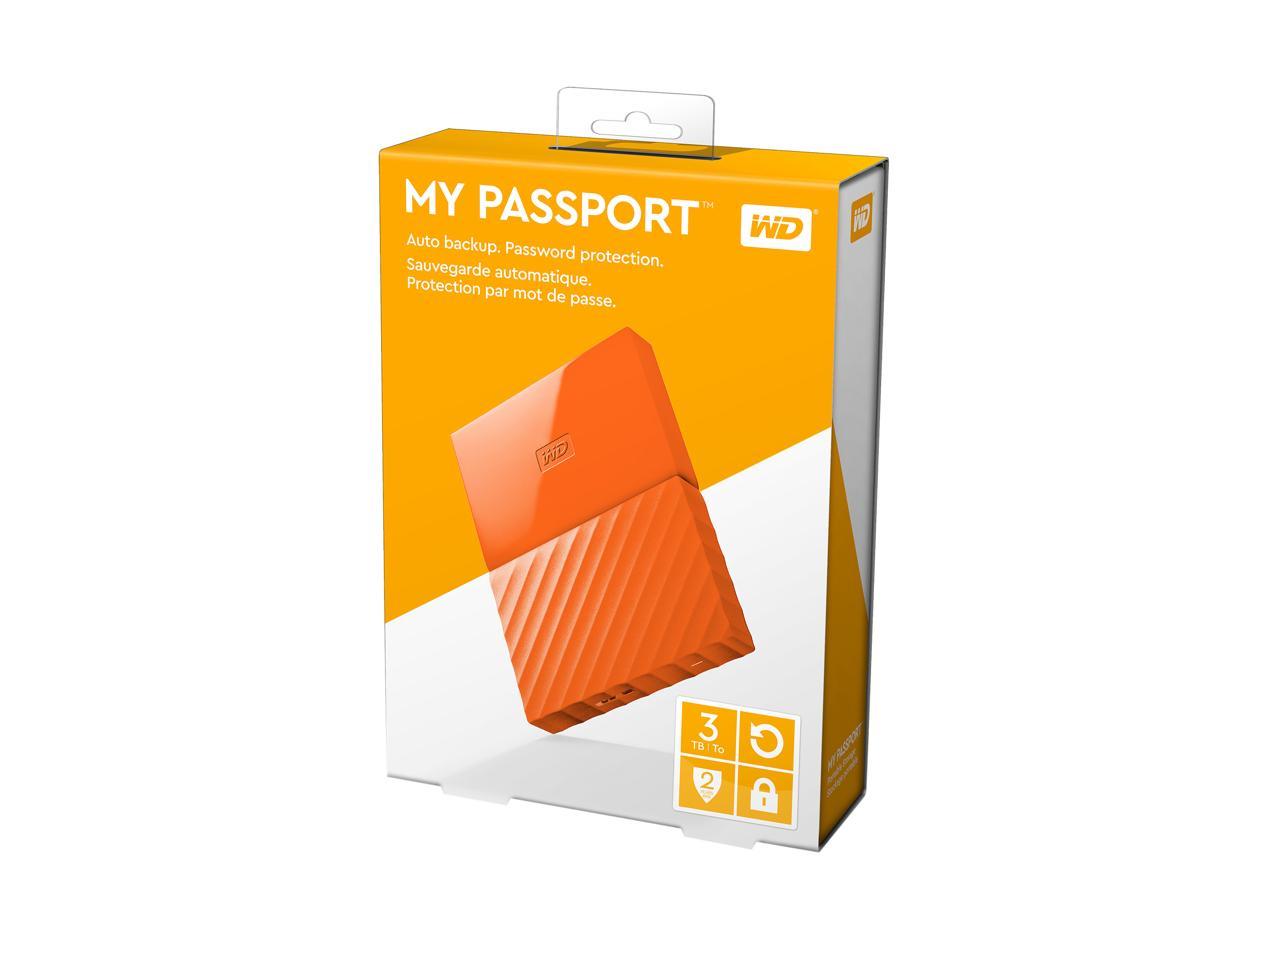 WD 3TB My Passport Portable Hard Drive USB 3.0 Model WDBYFT0030BOR-WESN Orange